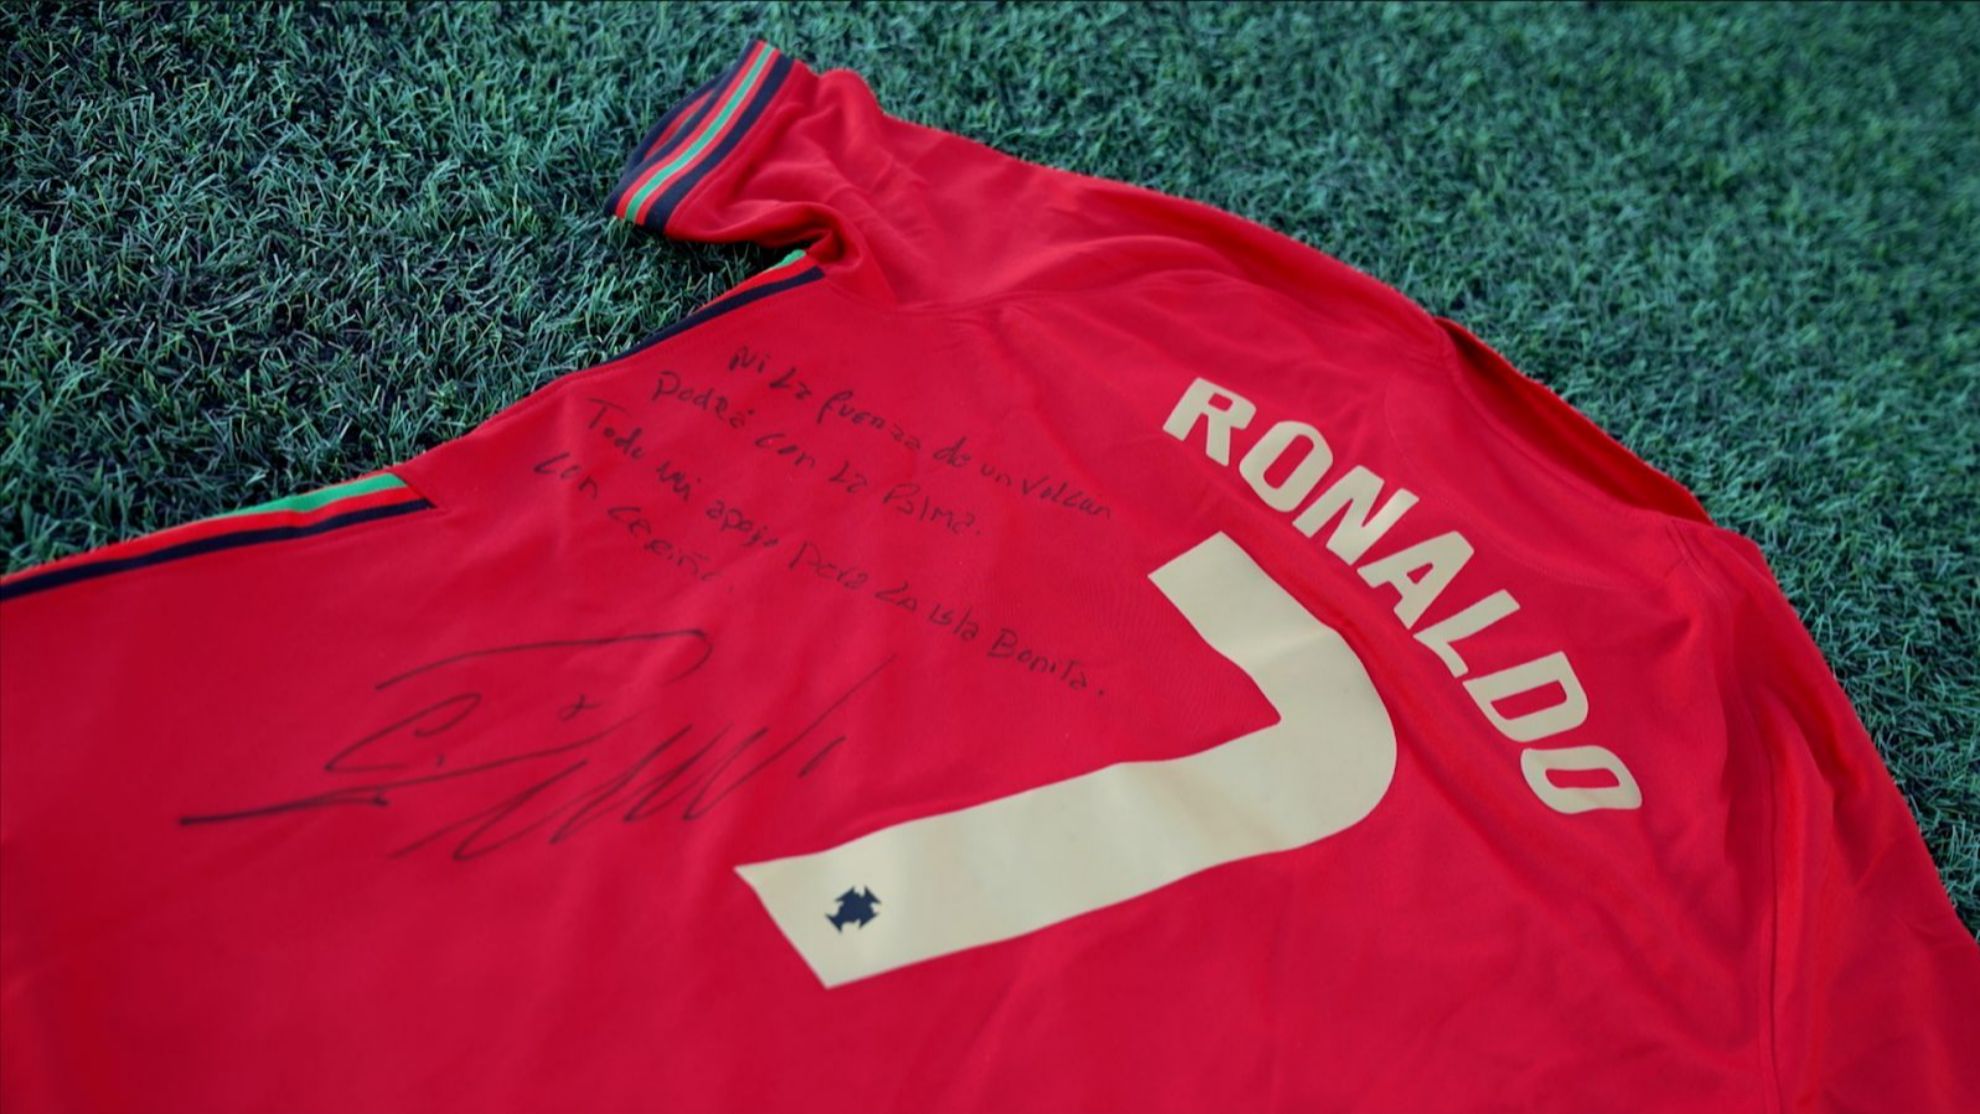 cristiano ronaldo signed jersey manchester united